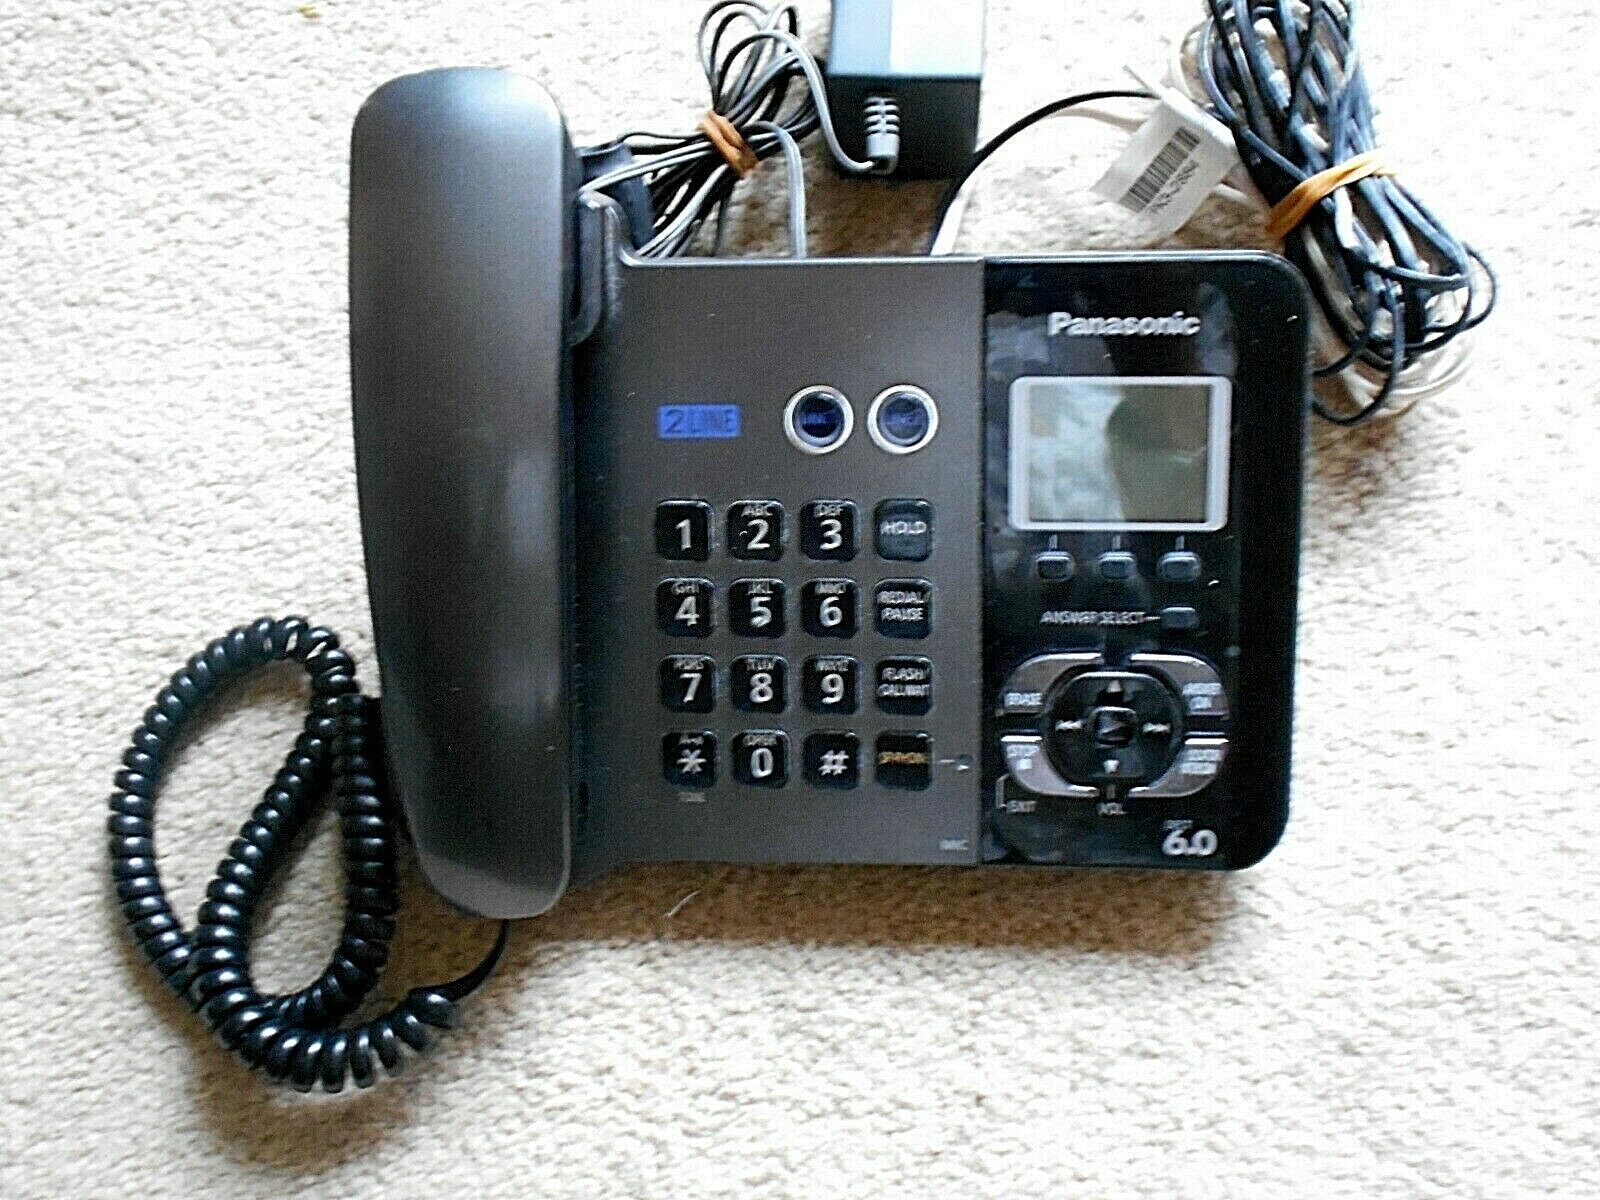 Primary image for Panasonic  2 line DECT 6.0 Telephone Model No. KX-TG9391T w/Panasonic AC Adapter